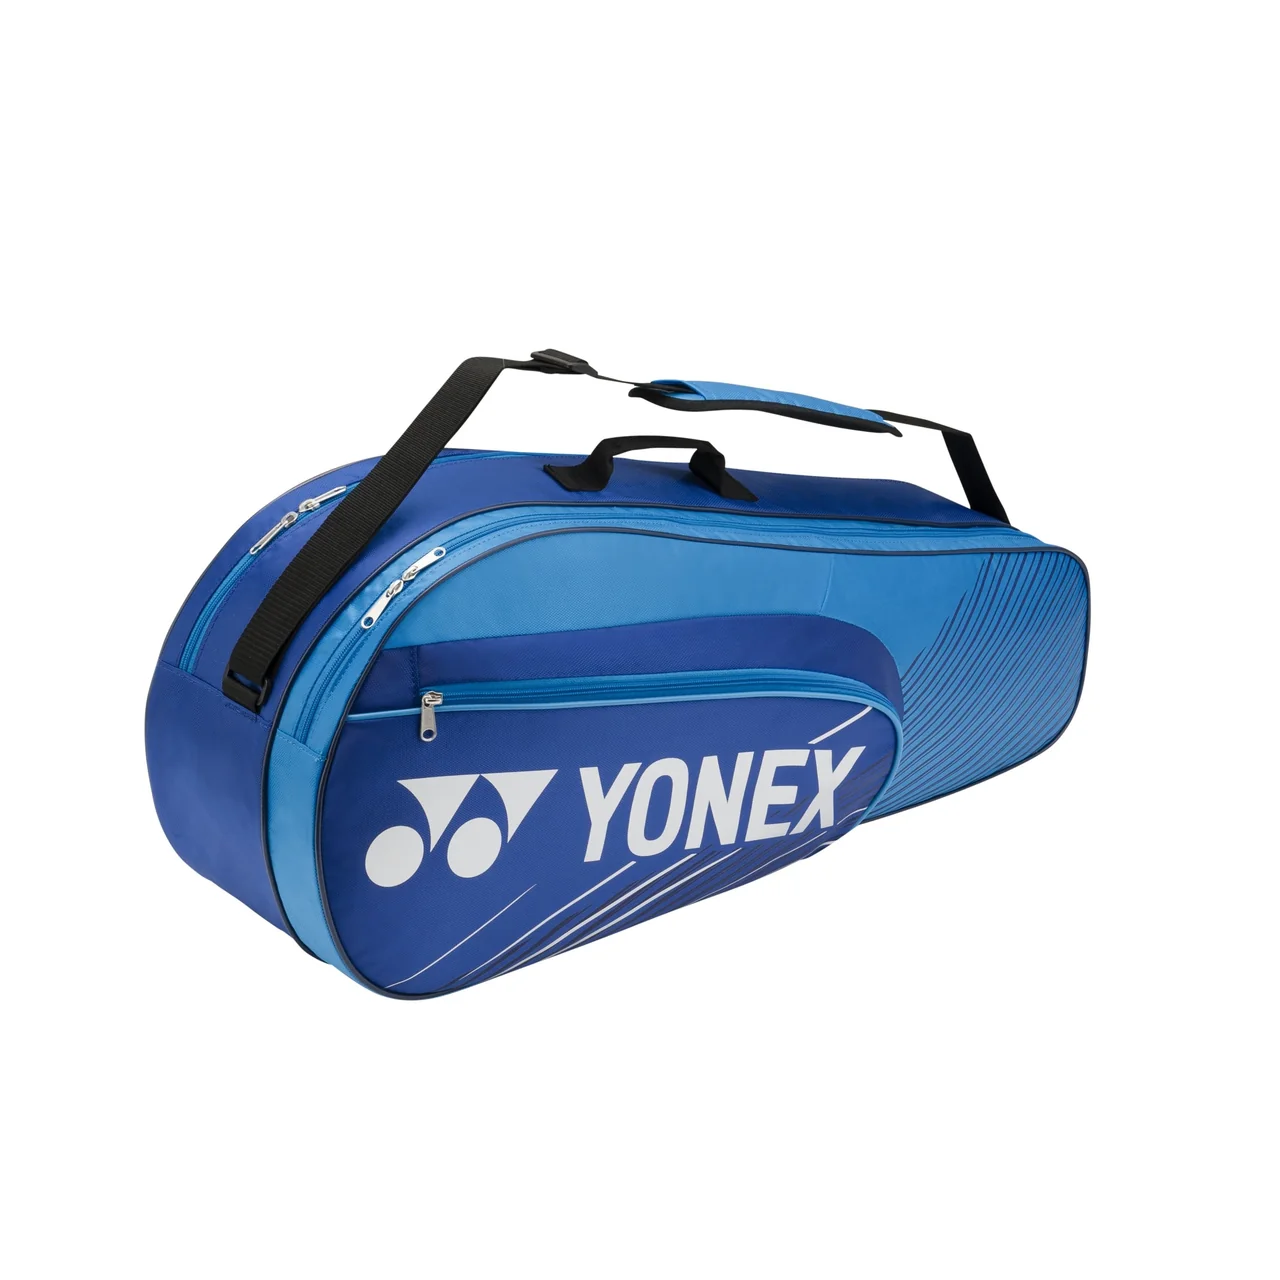 Yonex Team Collection x6 Blue